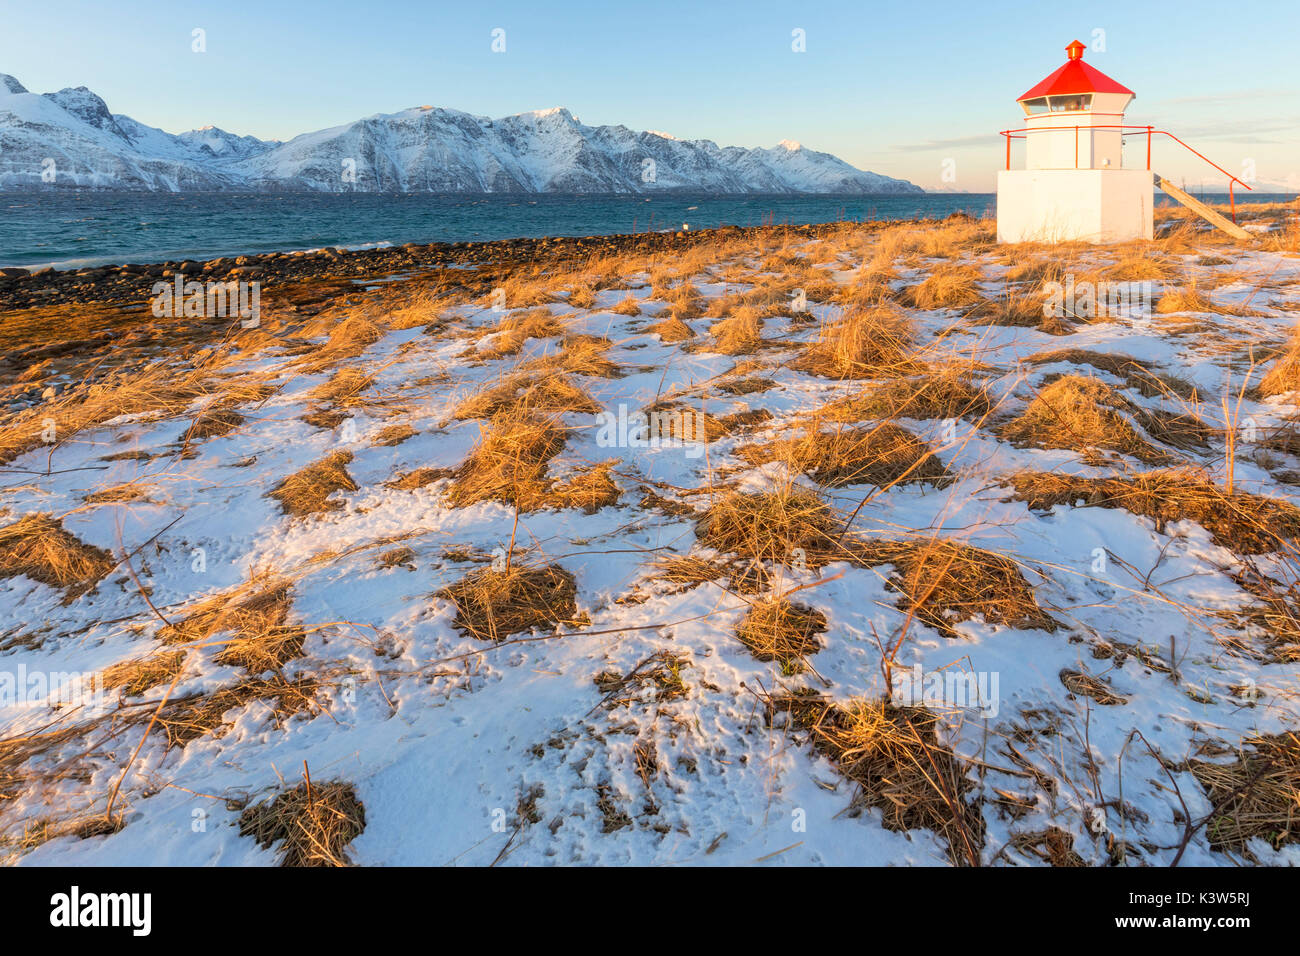 The sun illuminates the coast near a traditional lighthouse. Spaknesora naturreservat, Djupvik, Lyngenfjord, Lyngen Alps, Troms, Norway, Lapland, Europe. Stock Photo